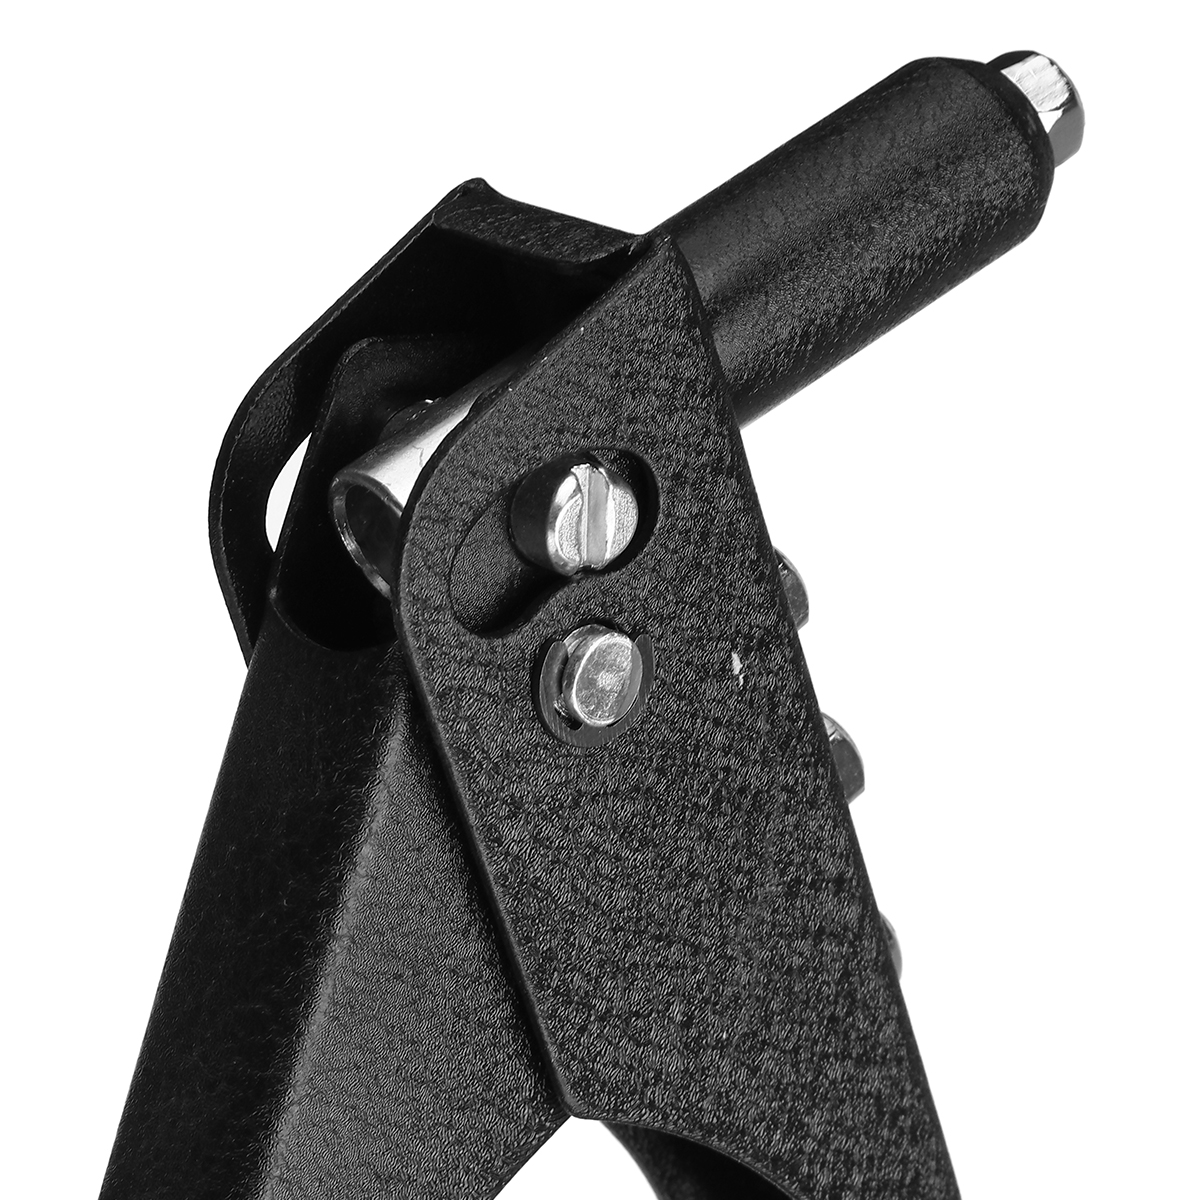 Portable-Pulling-Rivet-G-un-Blind-Rivet-Hand-Tool-with-40pcs-Rivet-For-Metal-Woodworking-1546842-6